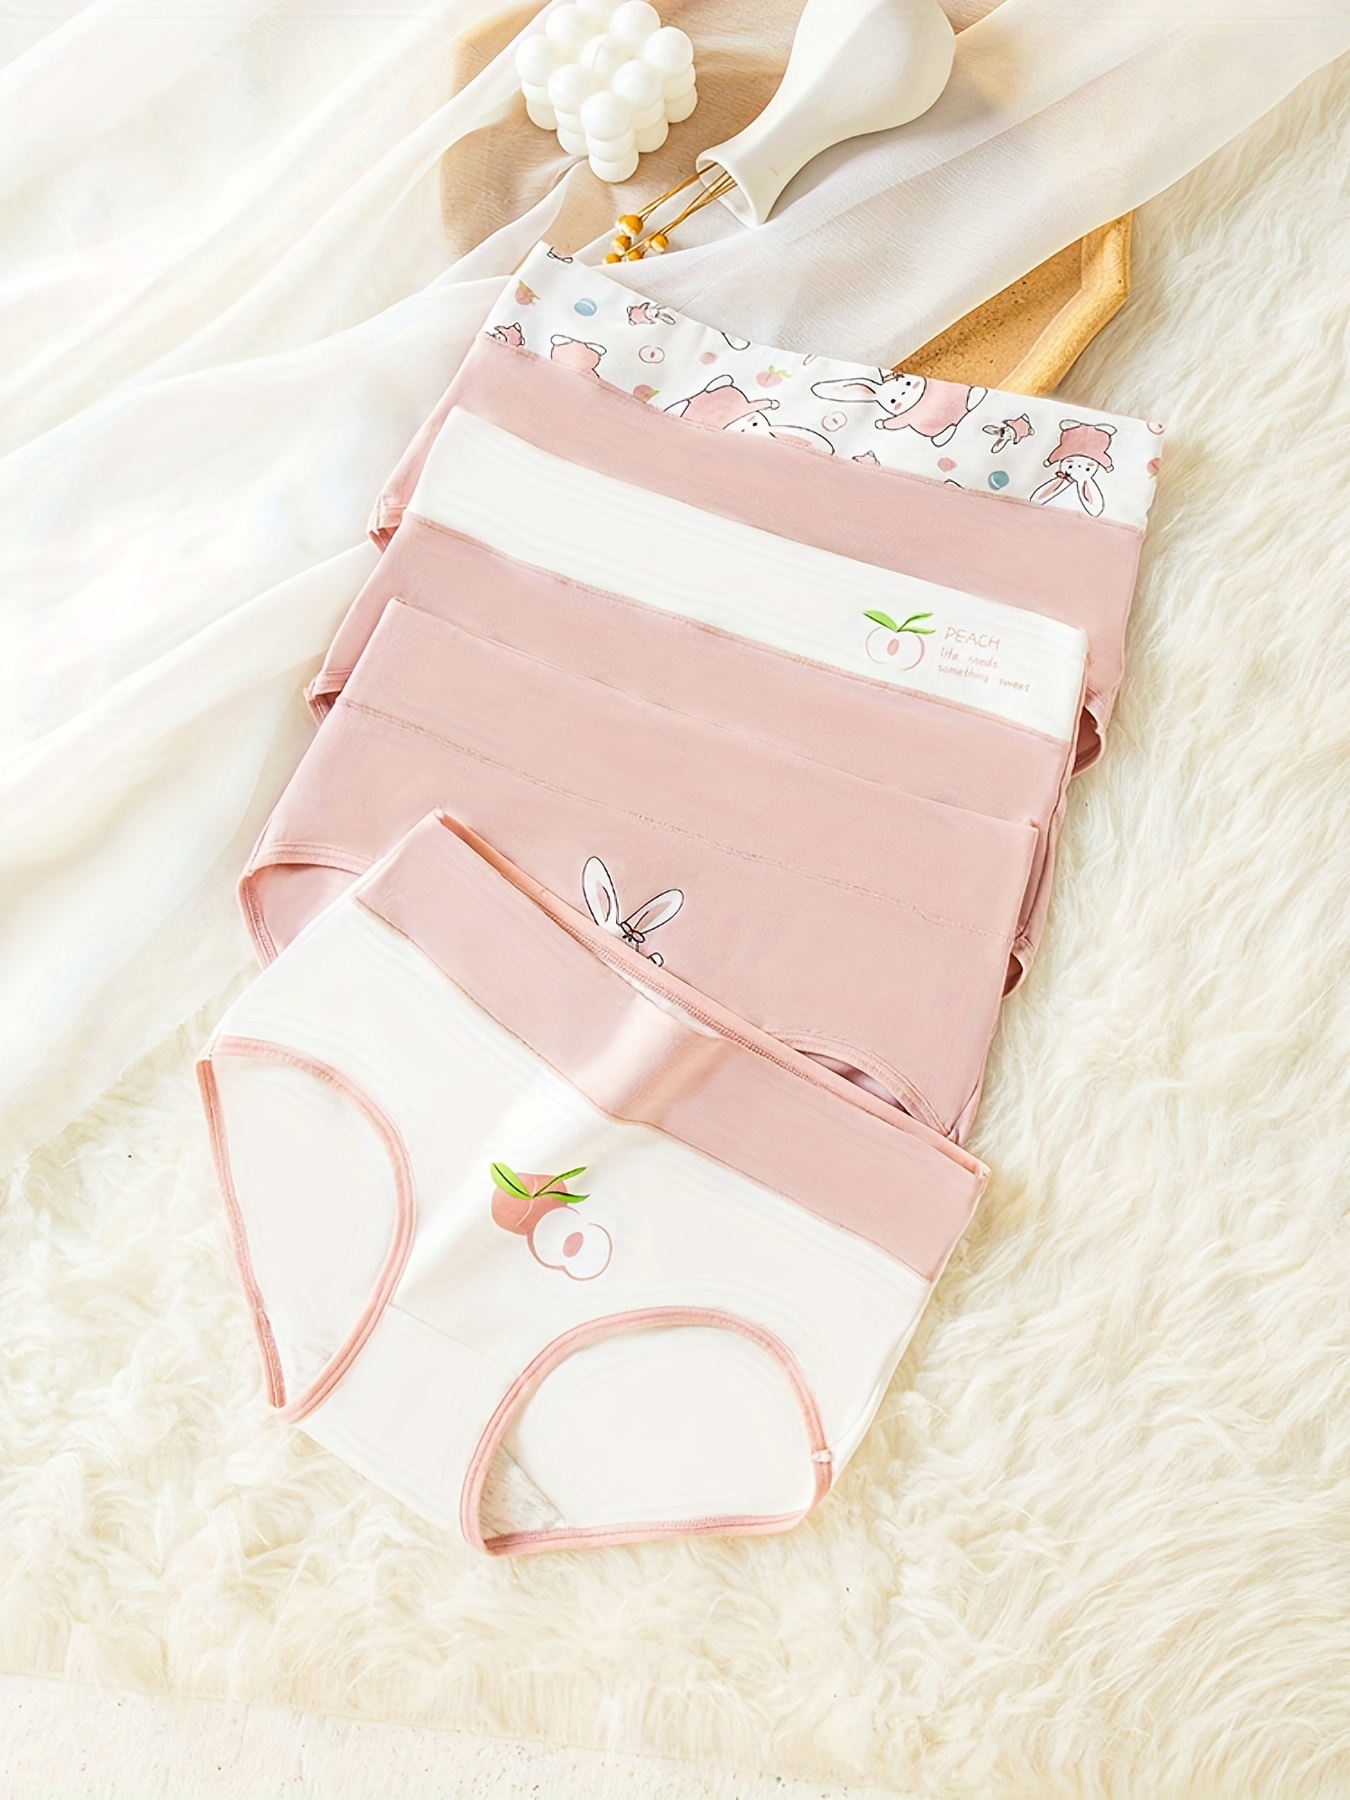 4pcs Peach & Bunny Print Briefs, Comfy & Cute Skin-friendly Intimates  Panties, Women's Lingerie & Underwear